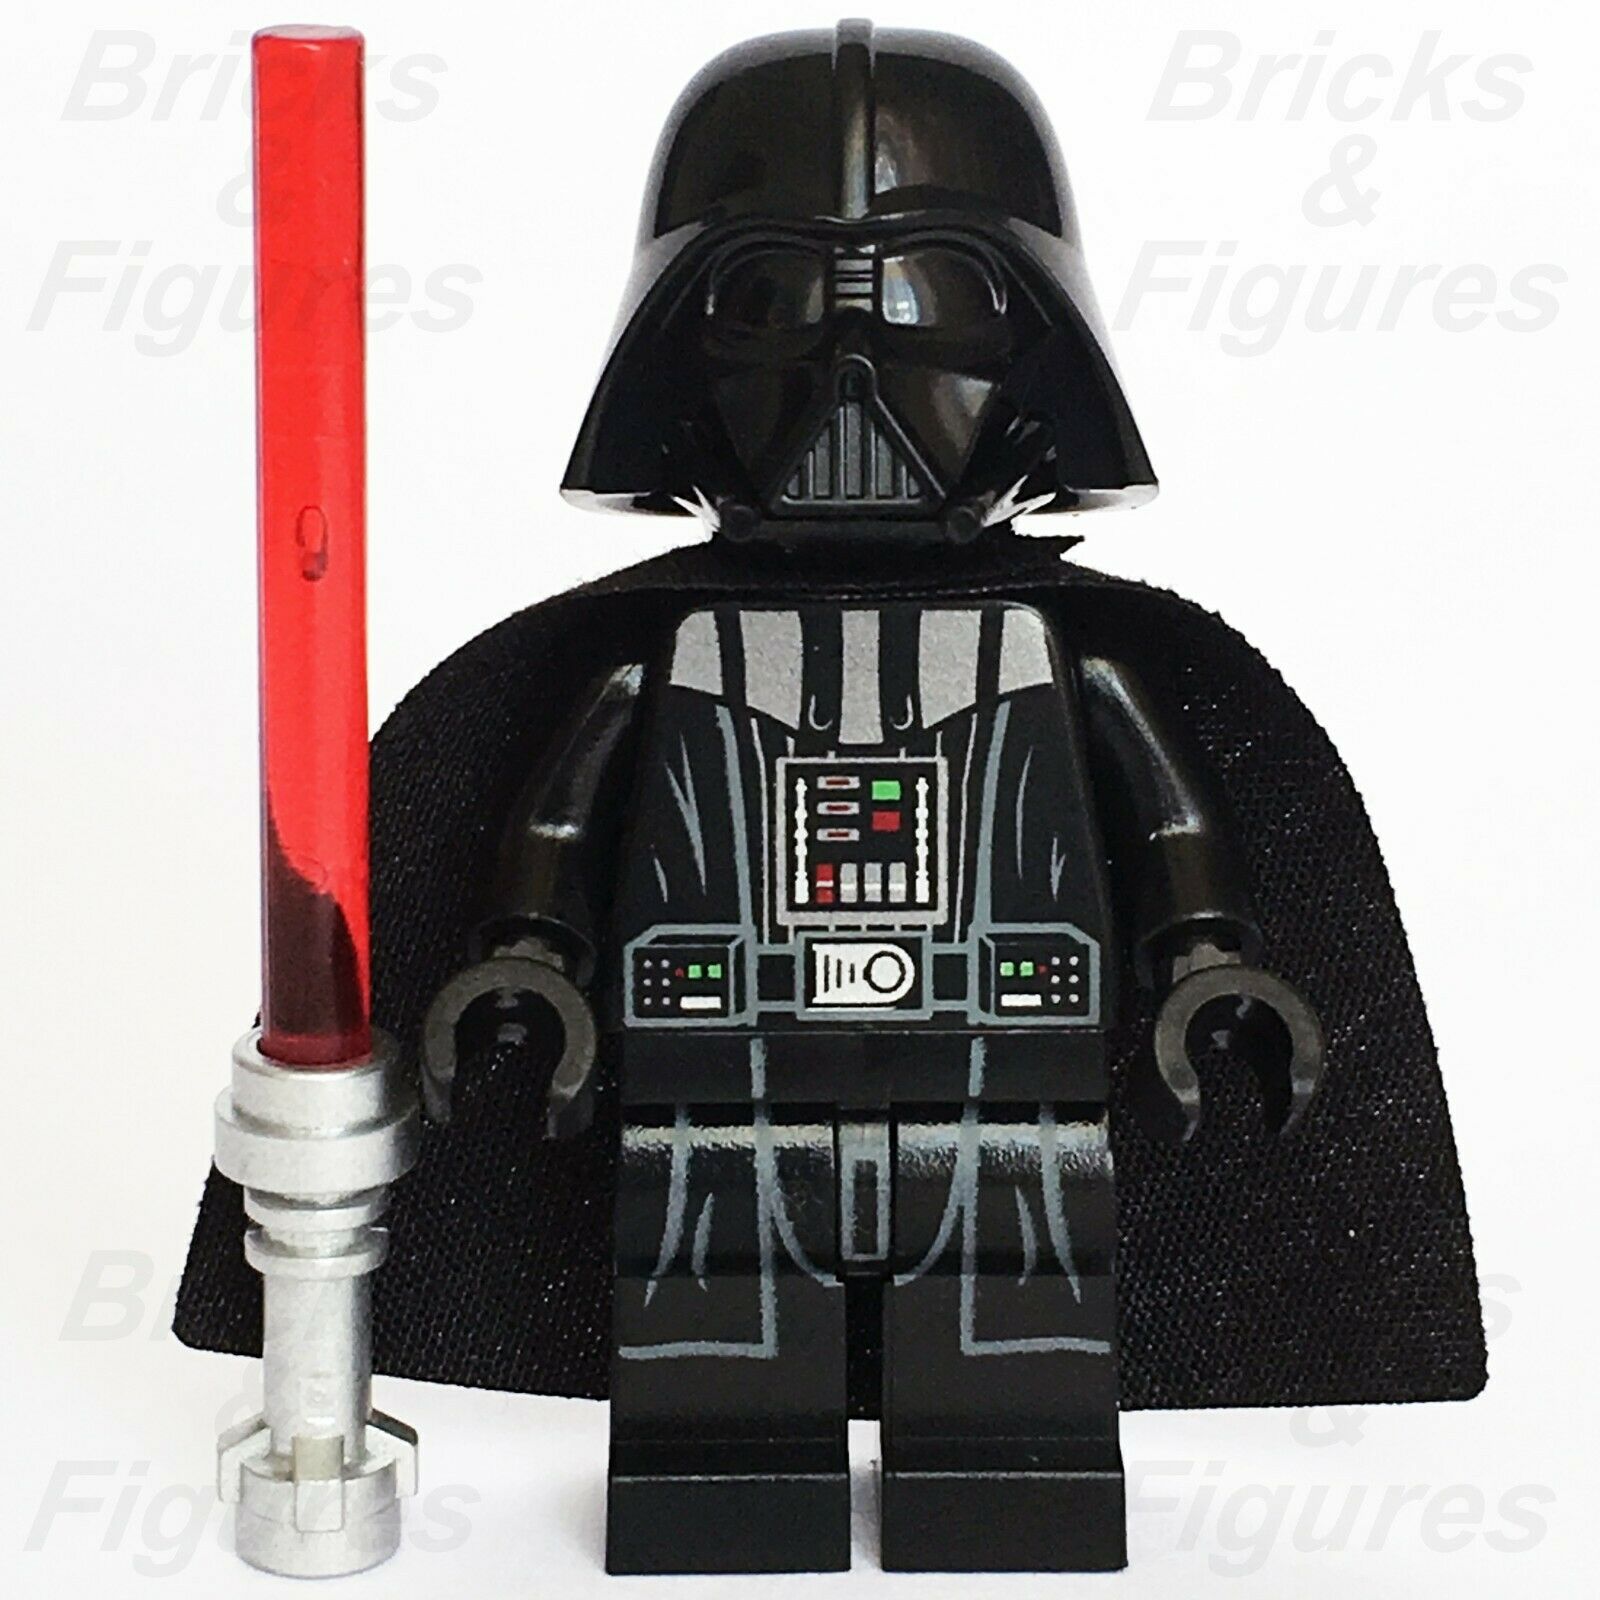 New Star Wars LEGO Darth Vader Sith Lord Return of the Jedi Minifigure 75093 - Bricks & Figures